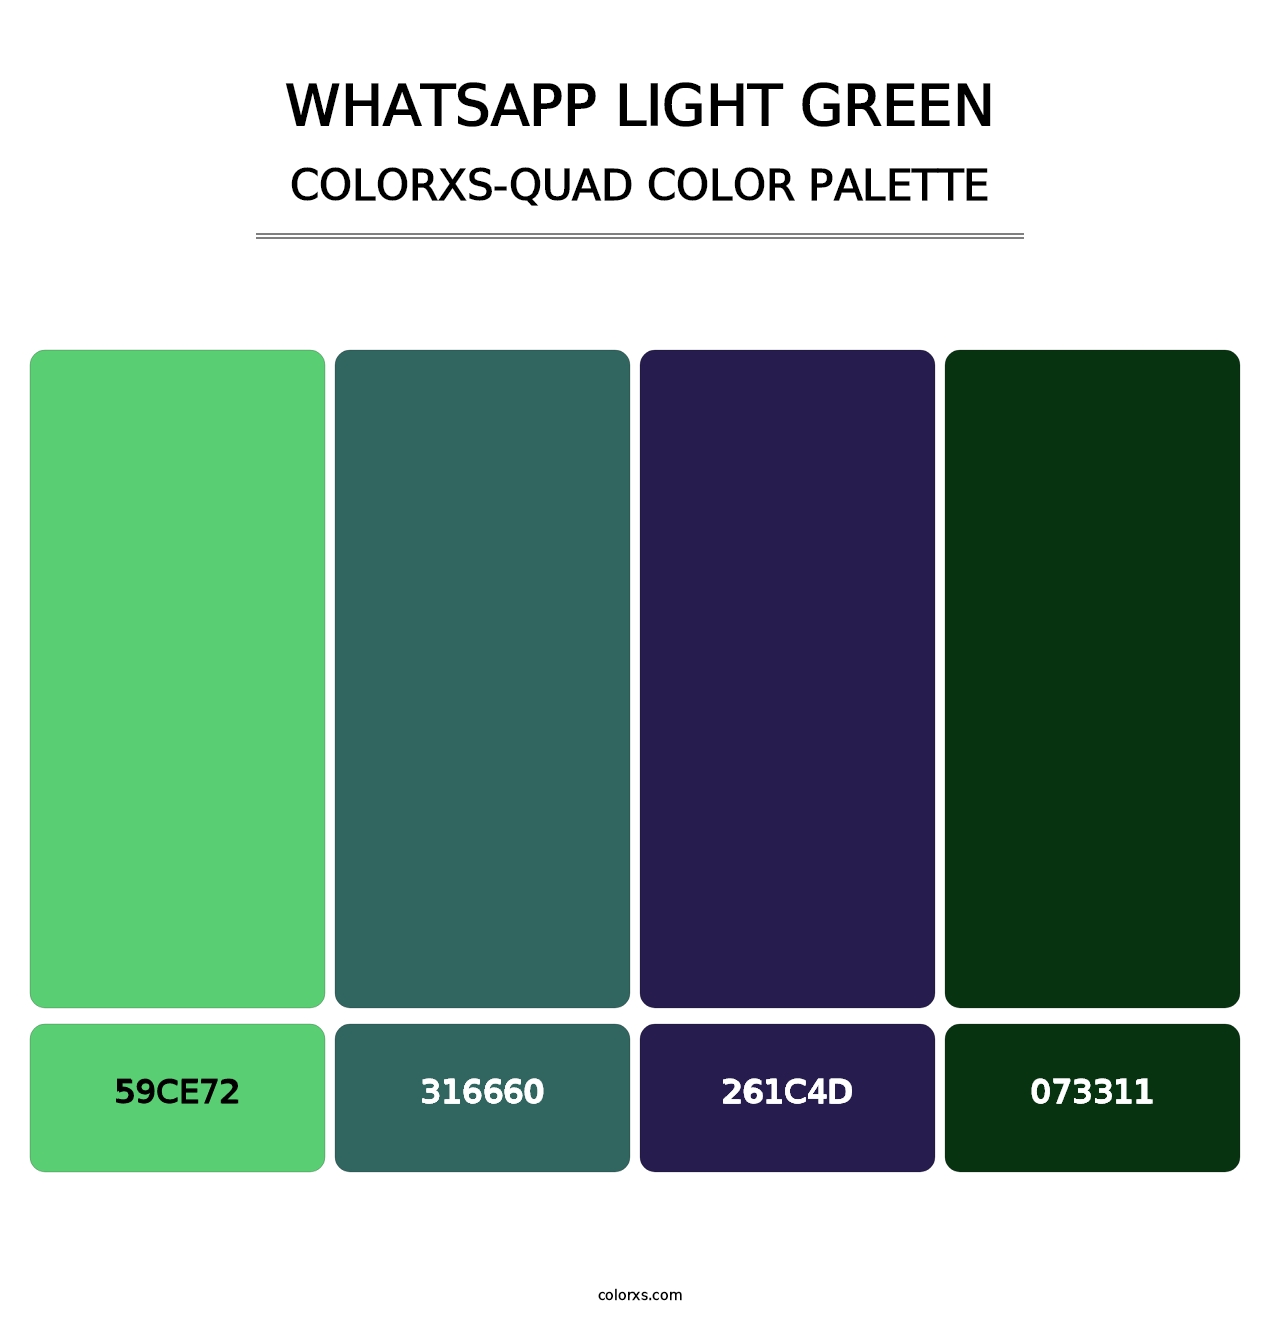 WhatsApp Light Green - Colorxs Quad Palette